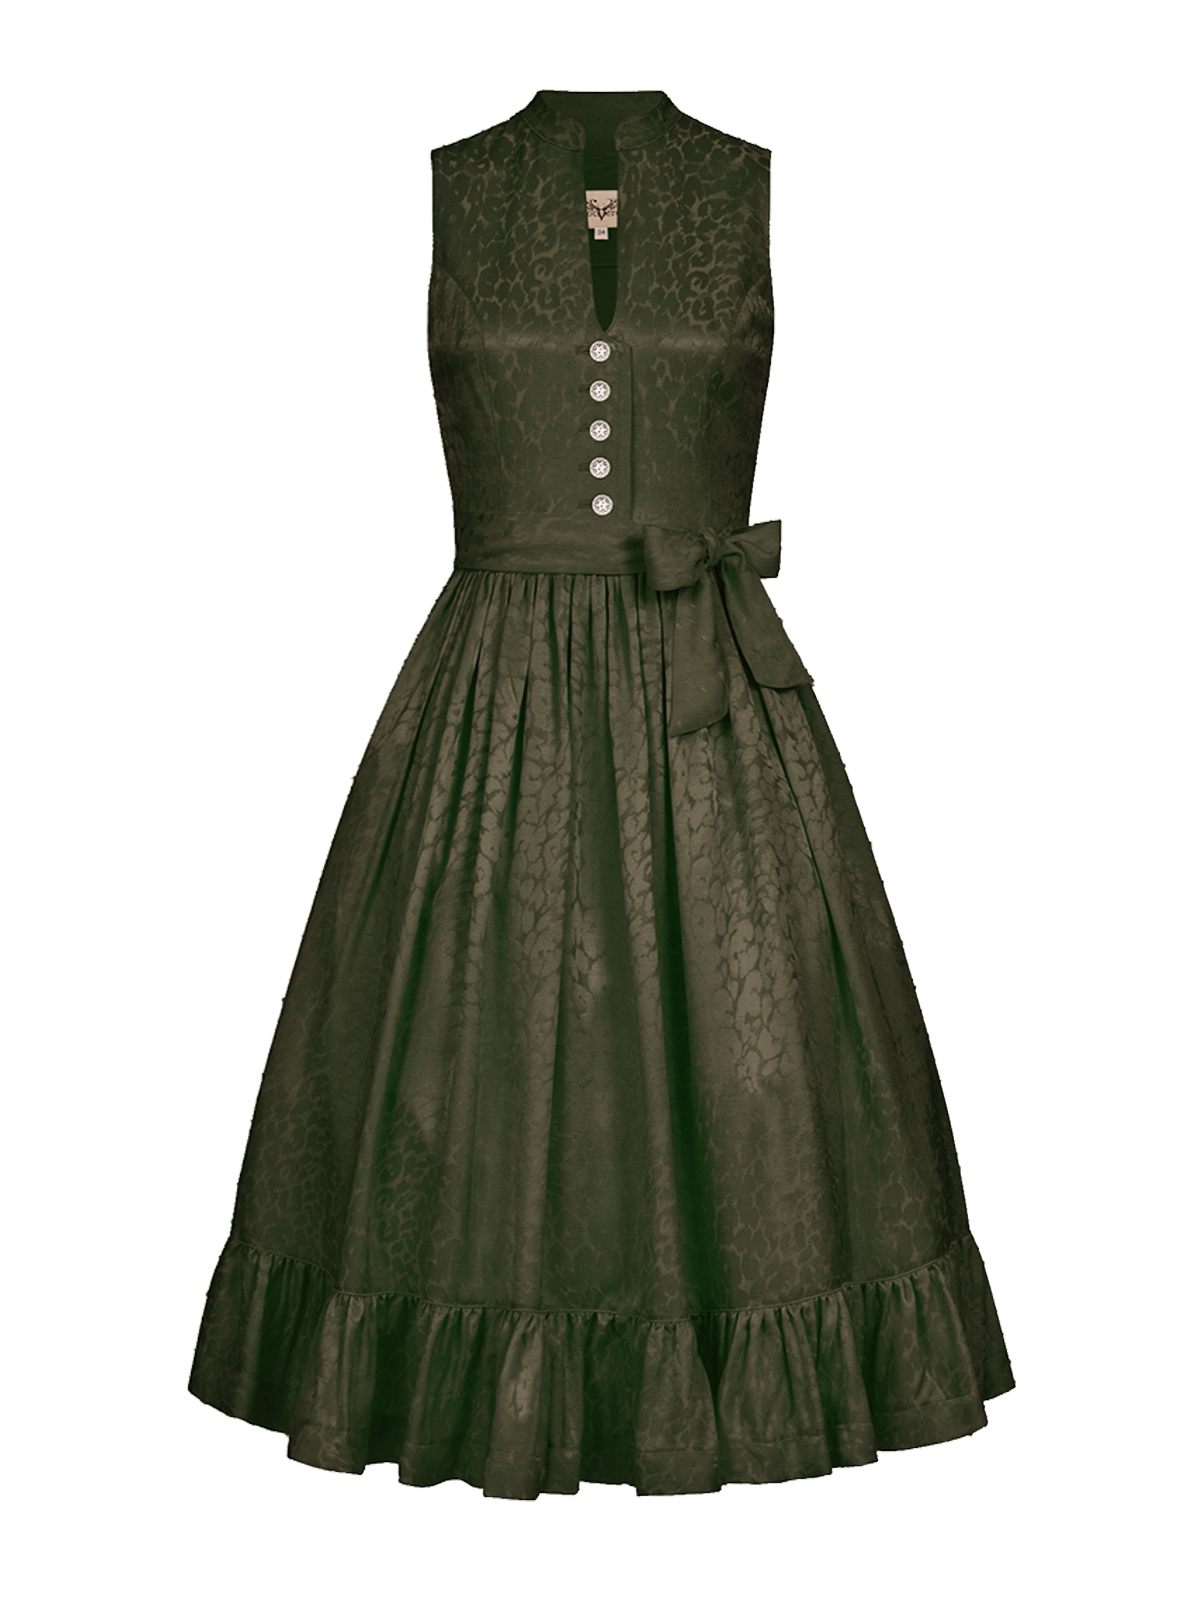 Oliv-farbenes Kleid mit Volantsaum